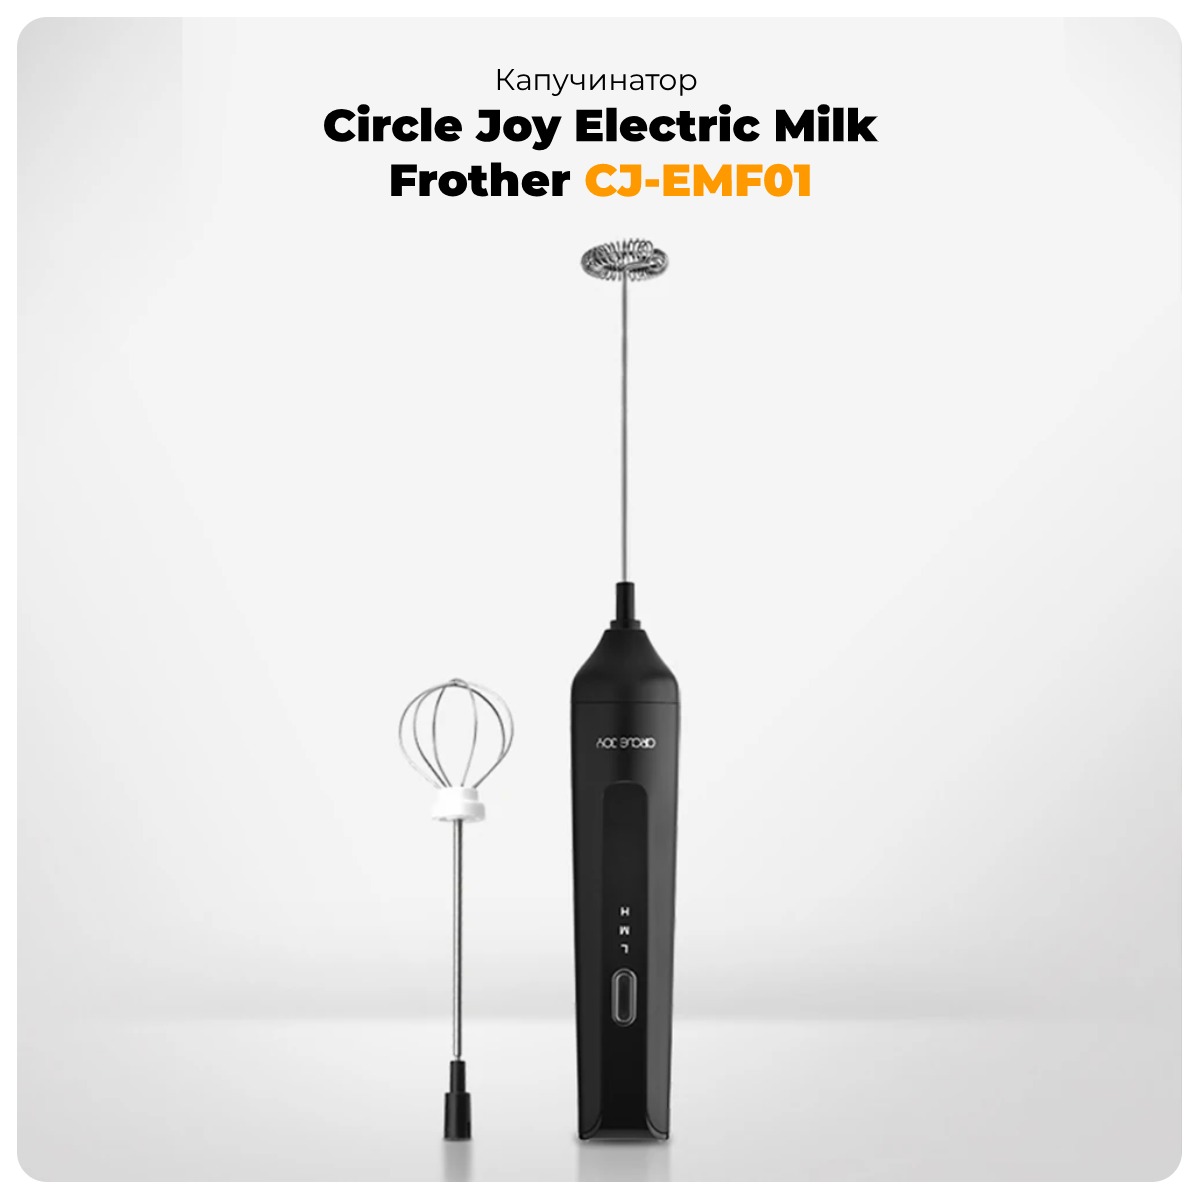 Circle-Joy-Electric-Milk-Frother-CJ-EMF01-01